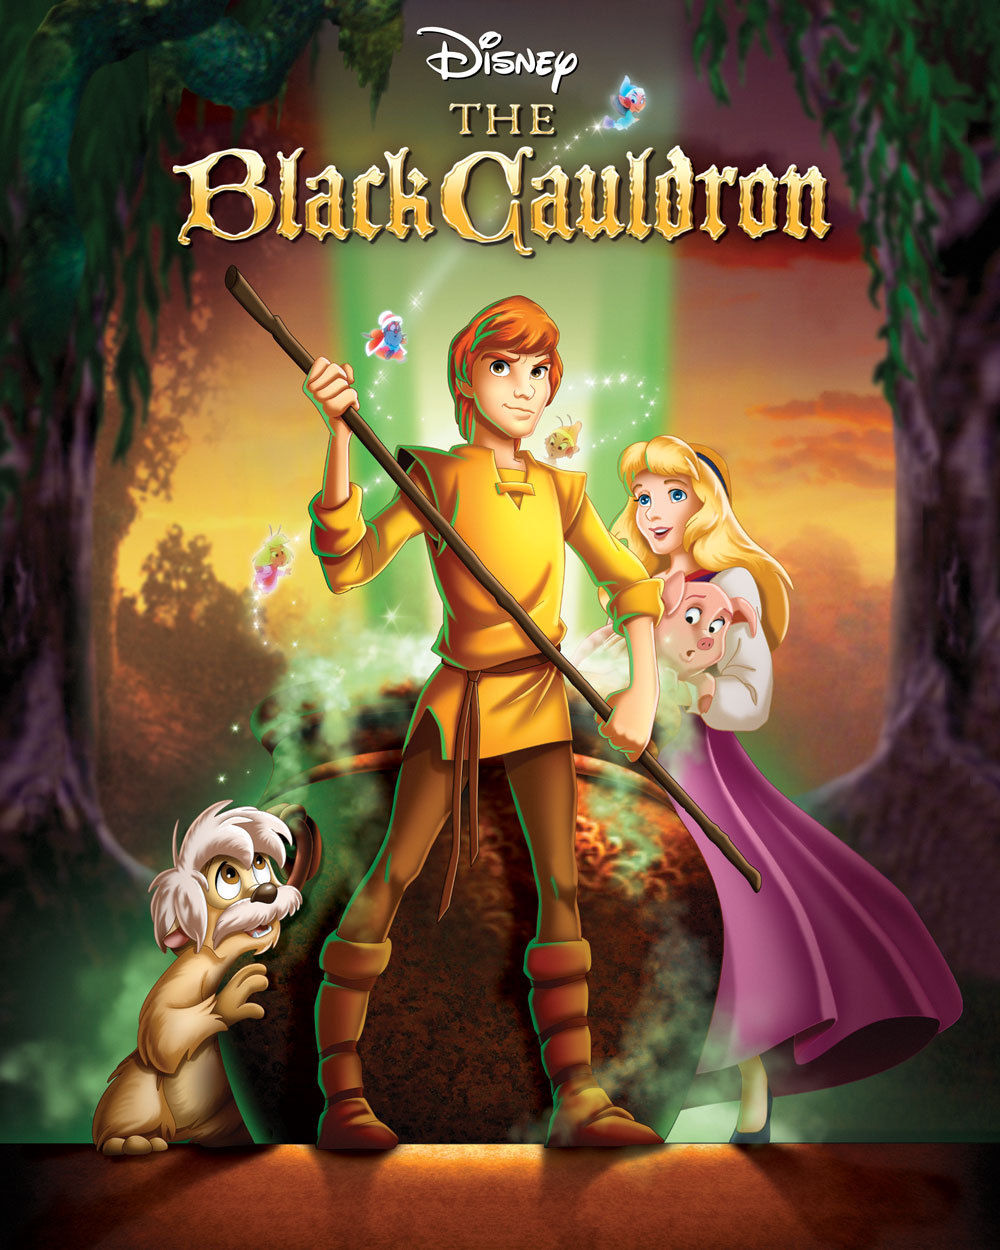 “Black Cauldron” Book Series in Development for a Disney Film!